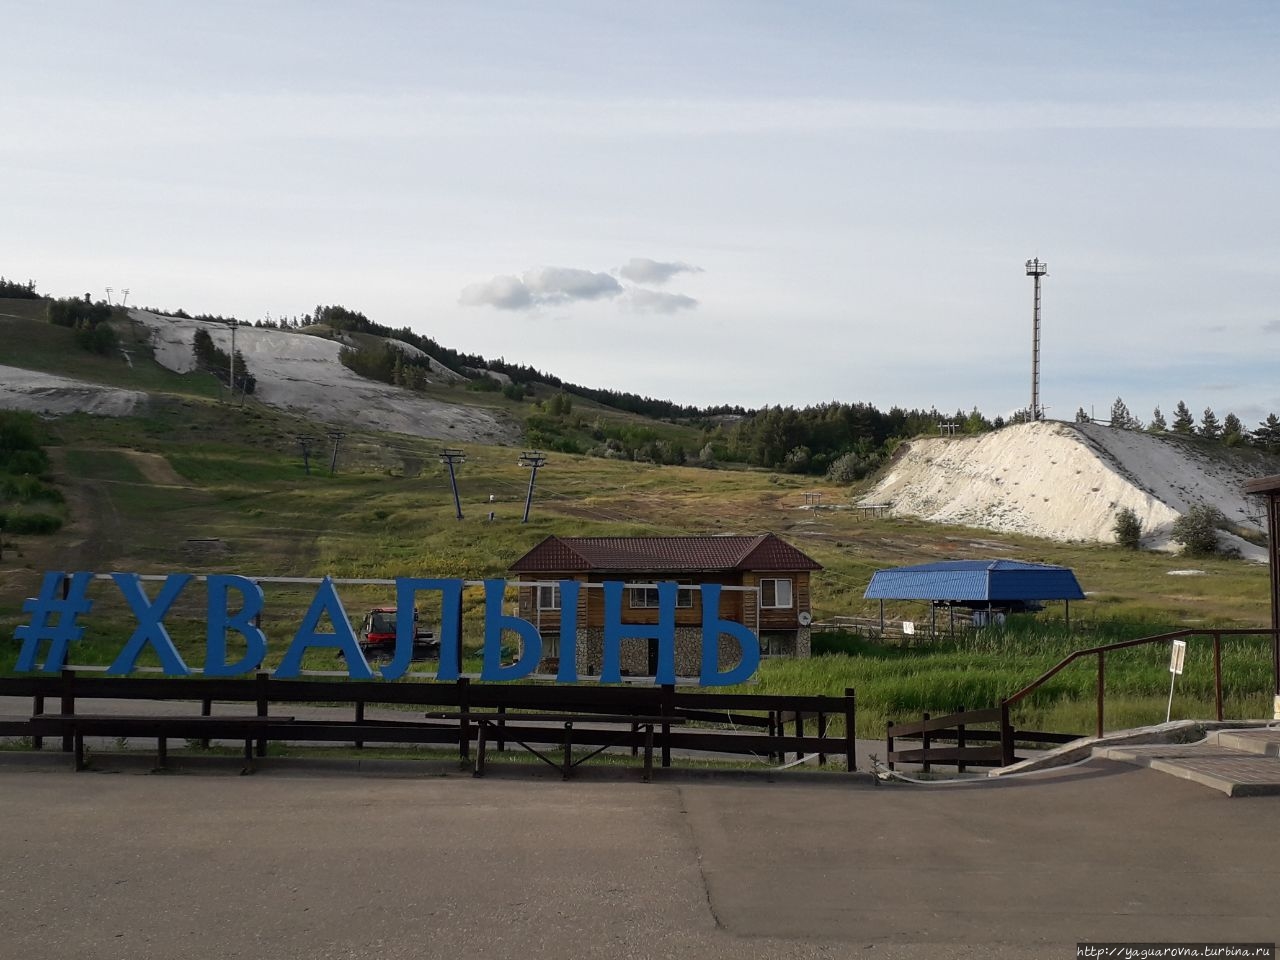 Хвалынский горнолыжный курорт / Khvalynsk ski resort